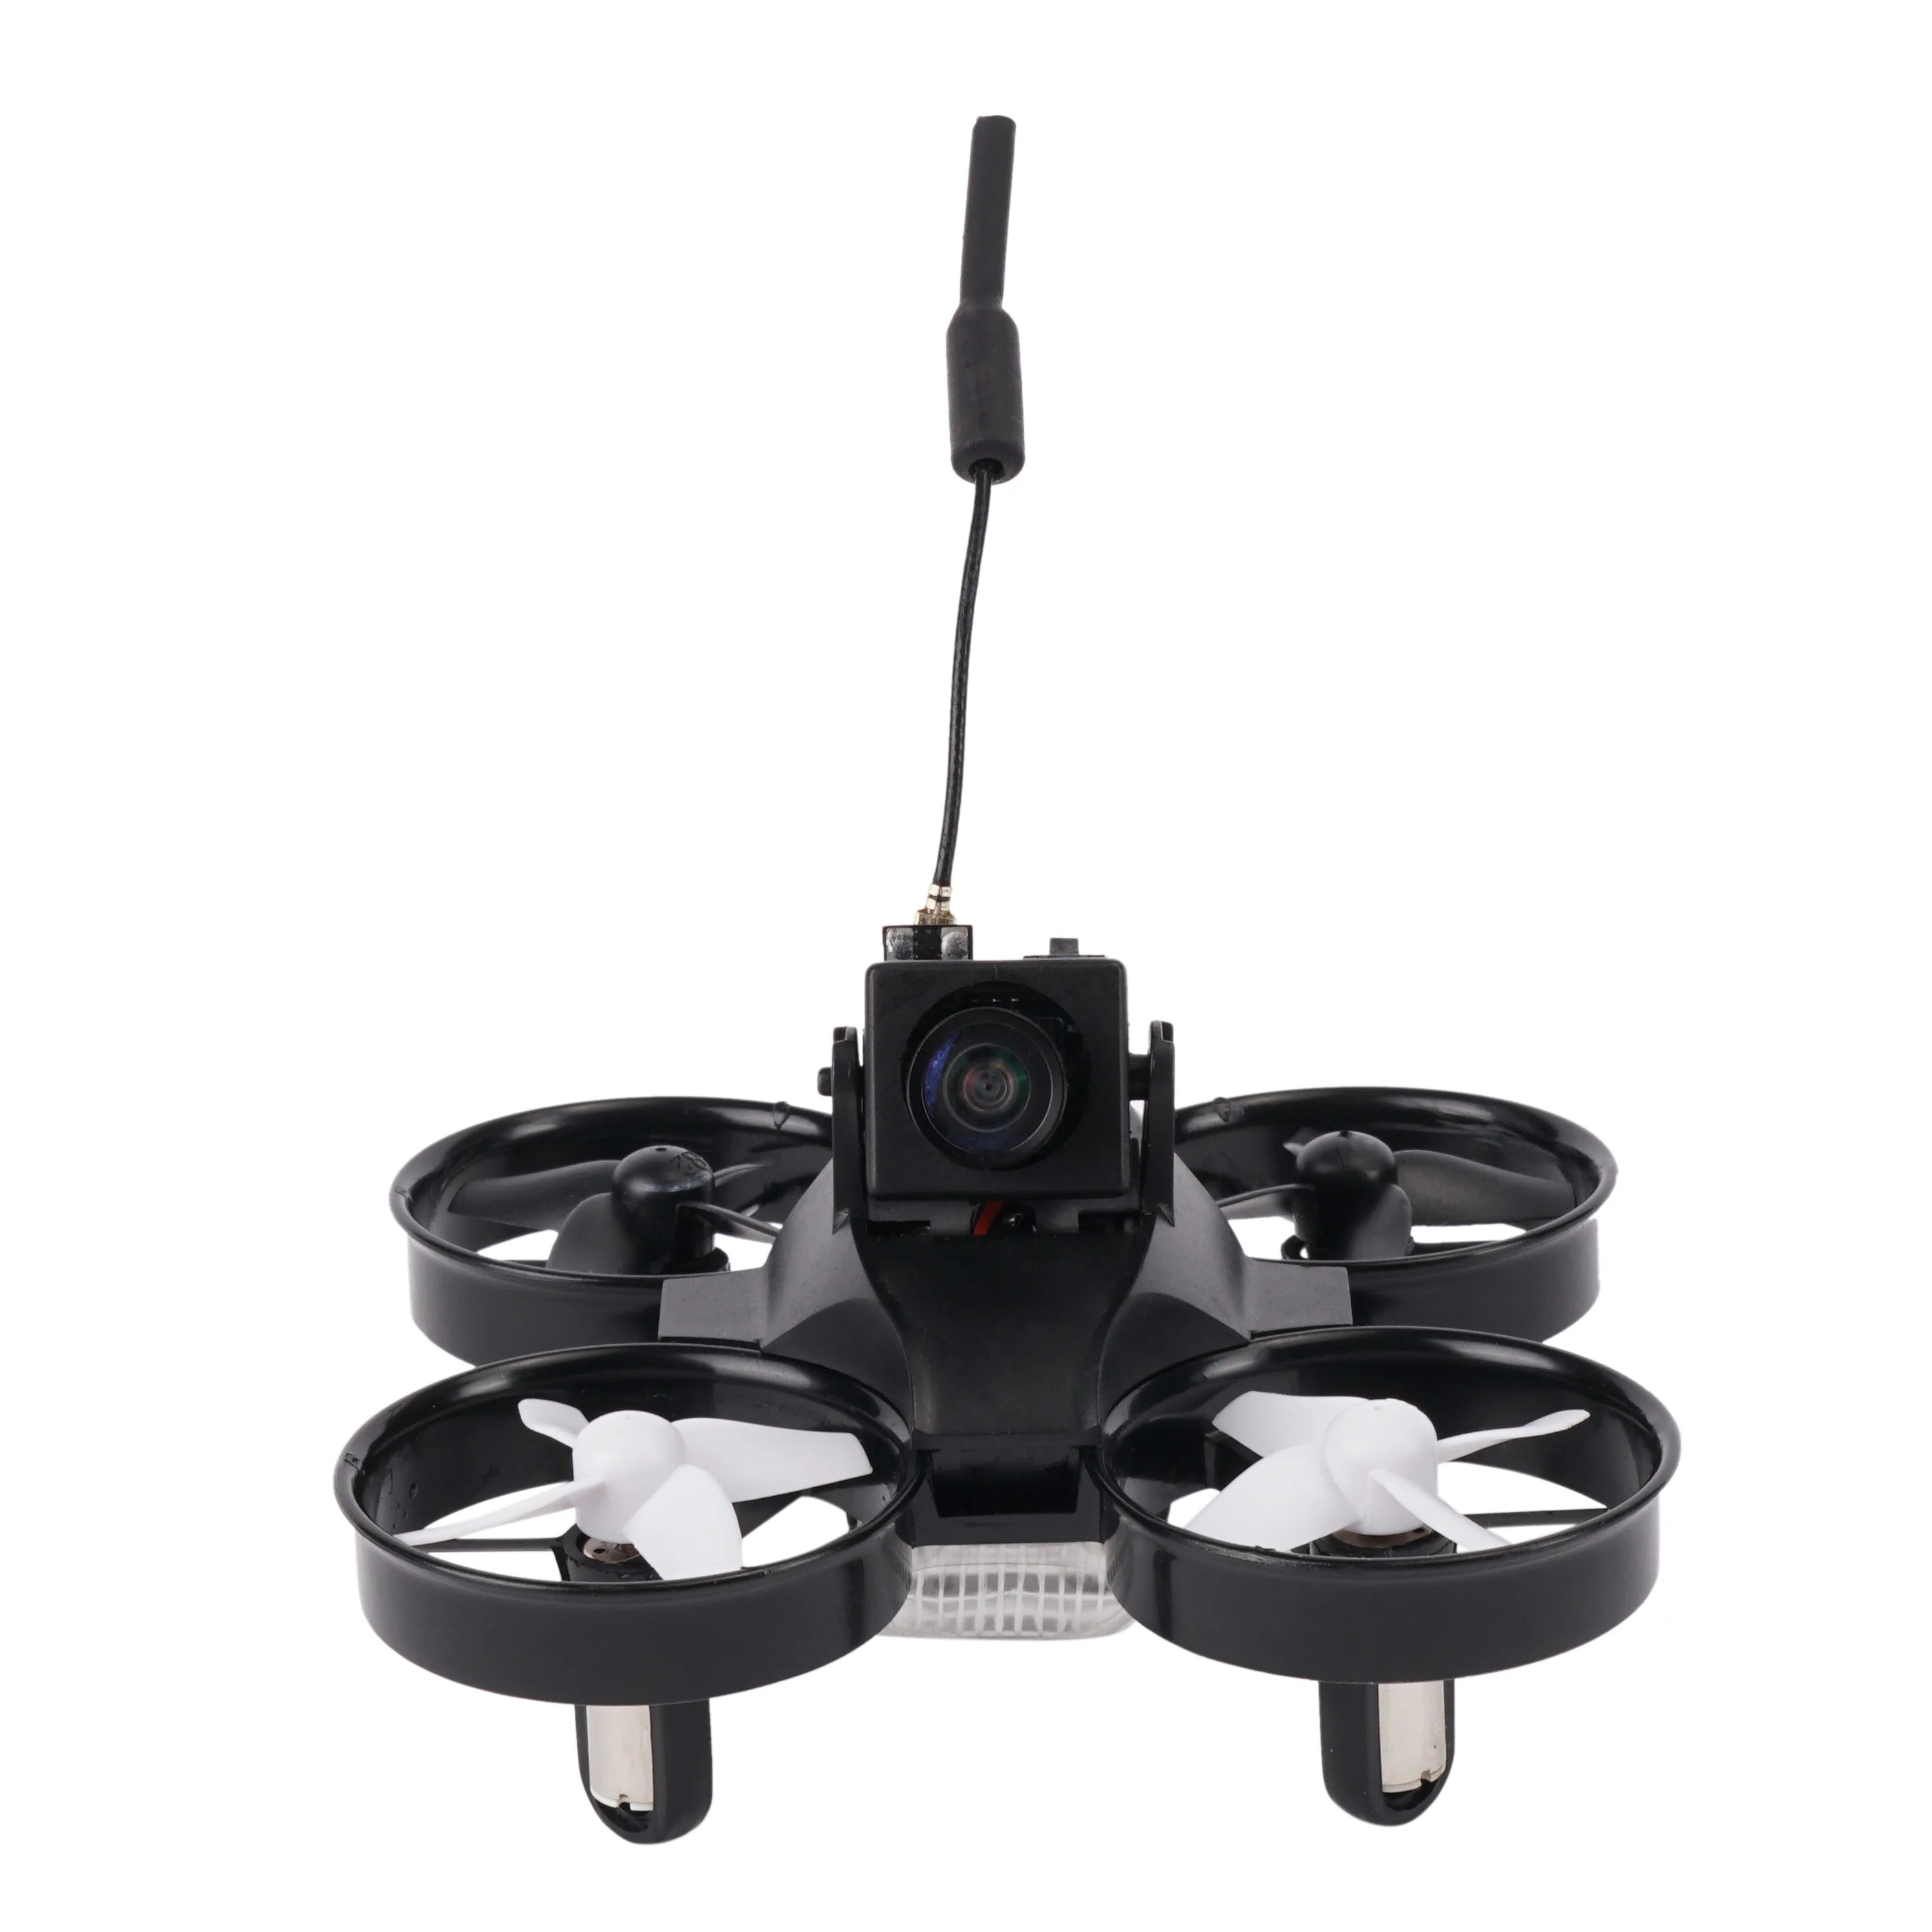 RTF Micro FPV RC Racing Drone, 2.You can enjoy the FPV through Goggles